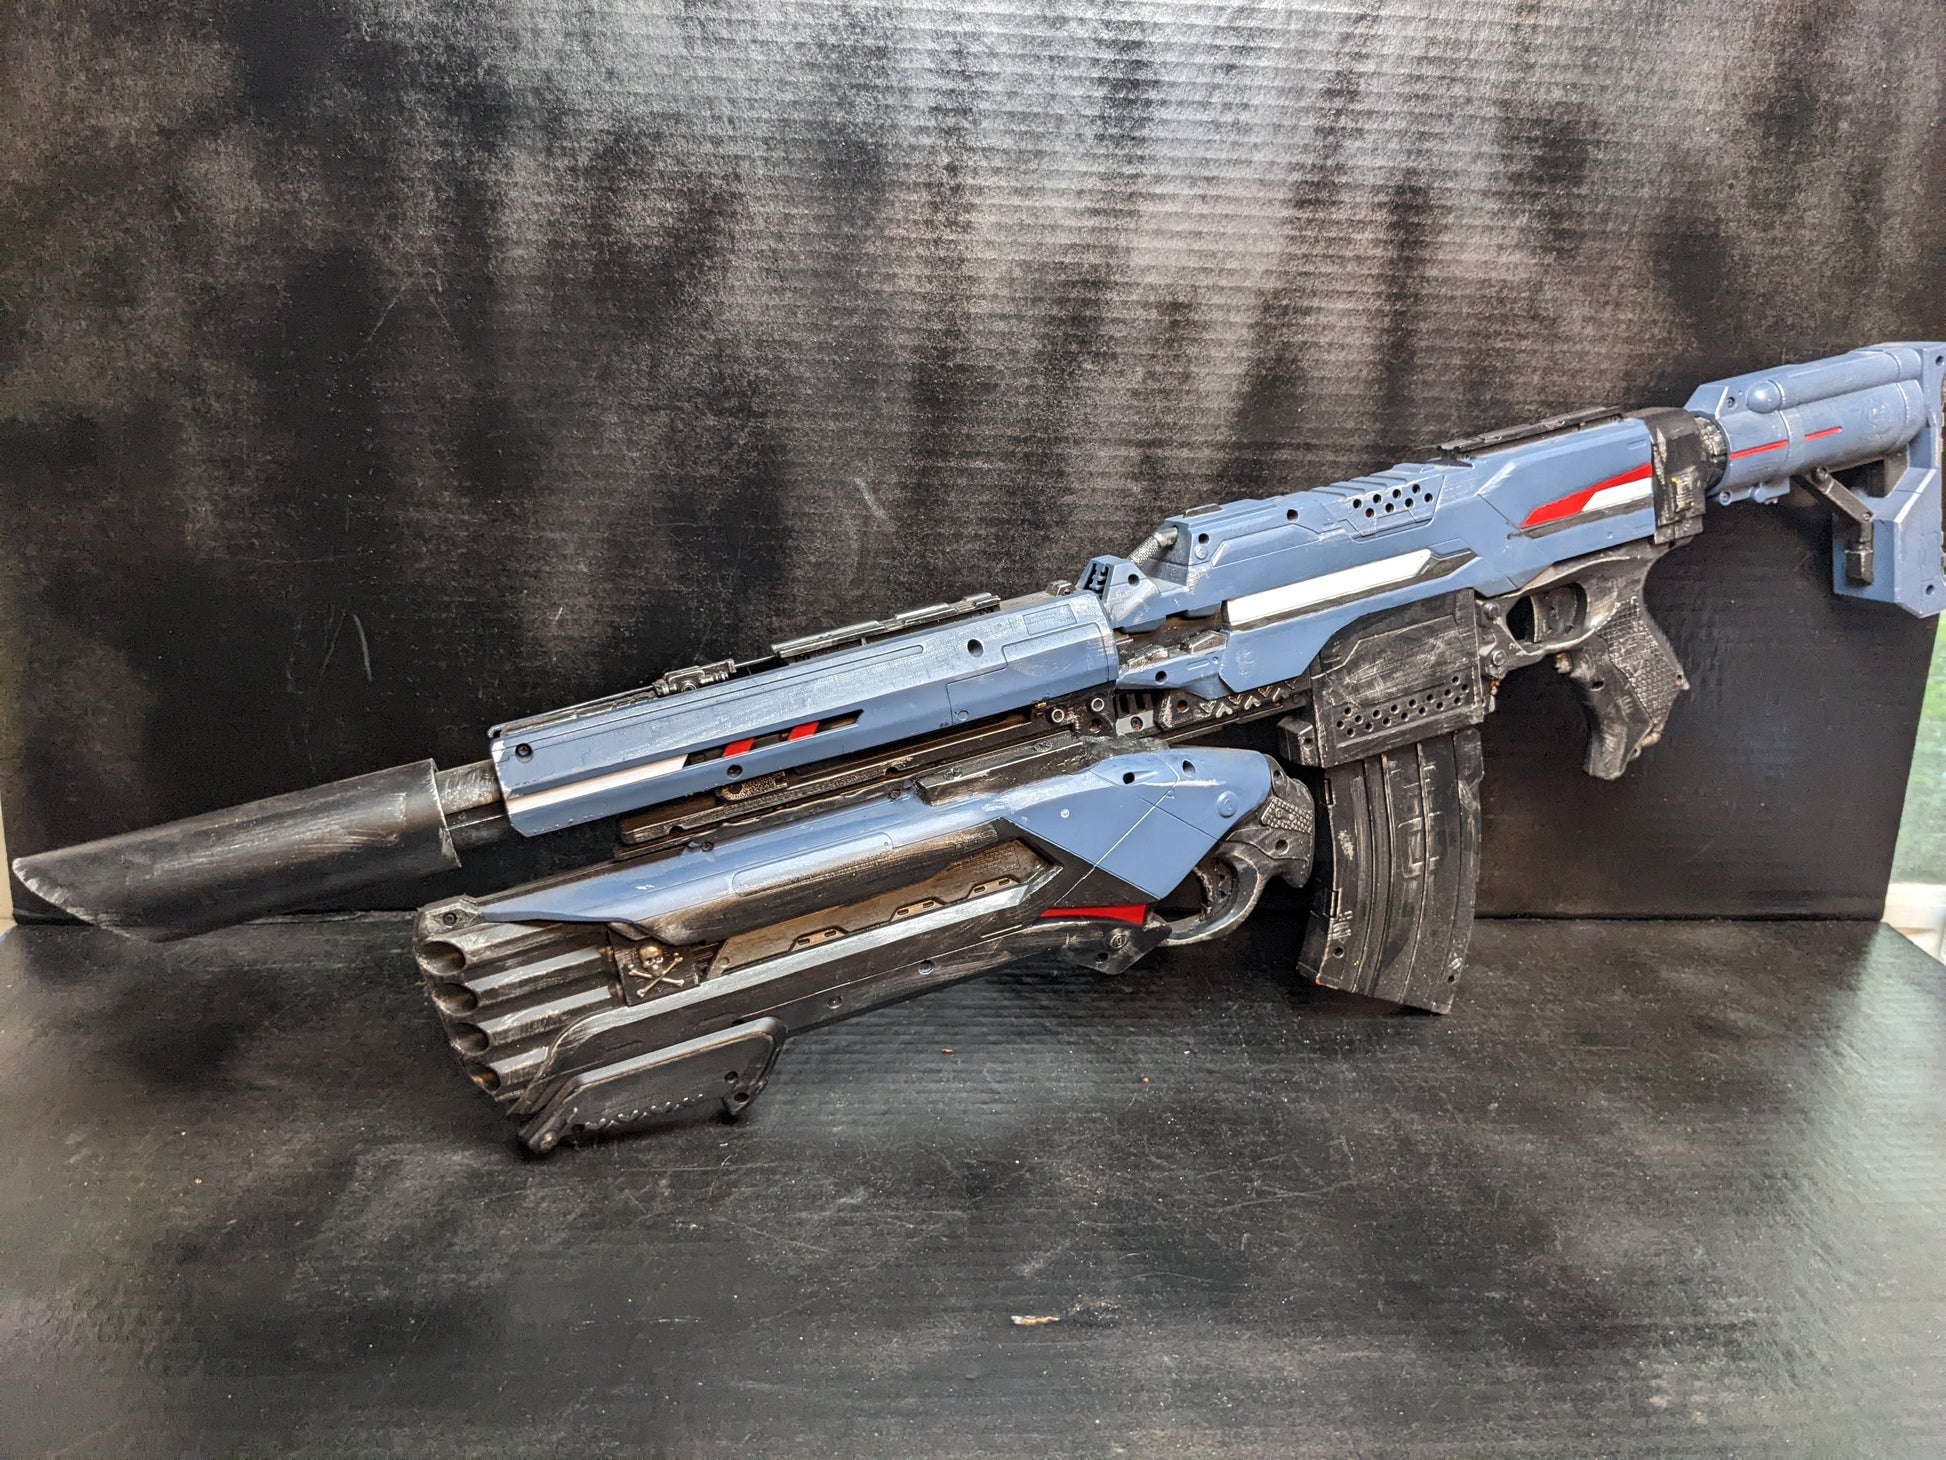 Nerf N-Strike Elite Modulus Stryfe Semi-Automatic Blaster